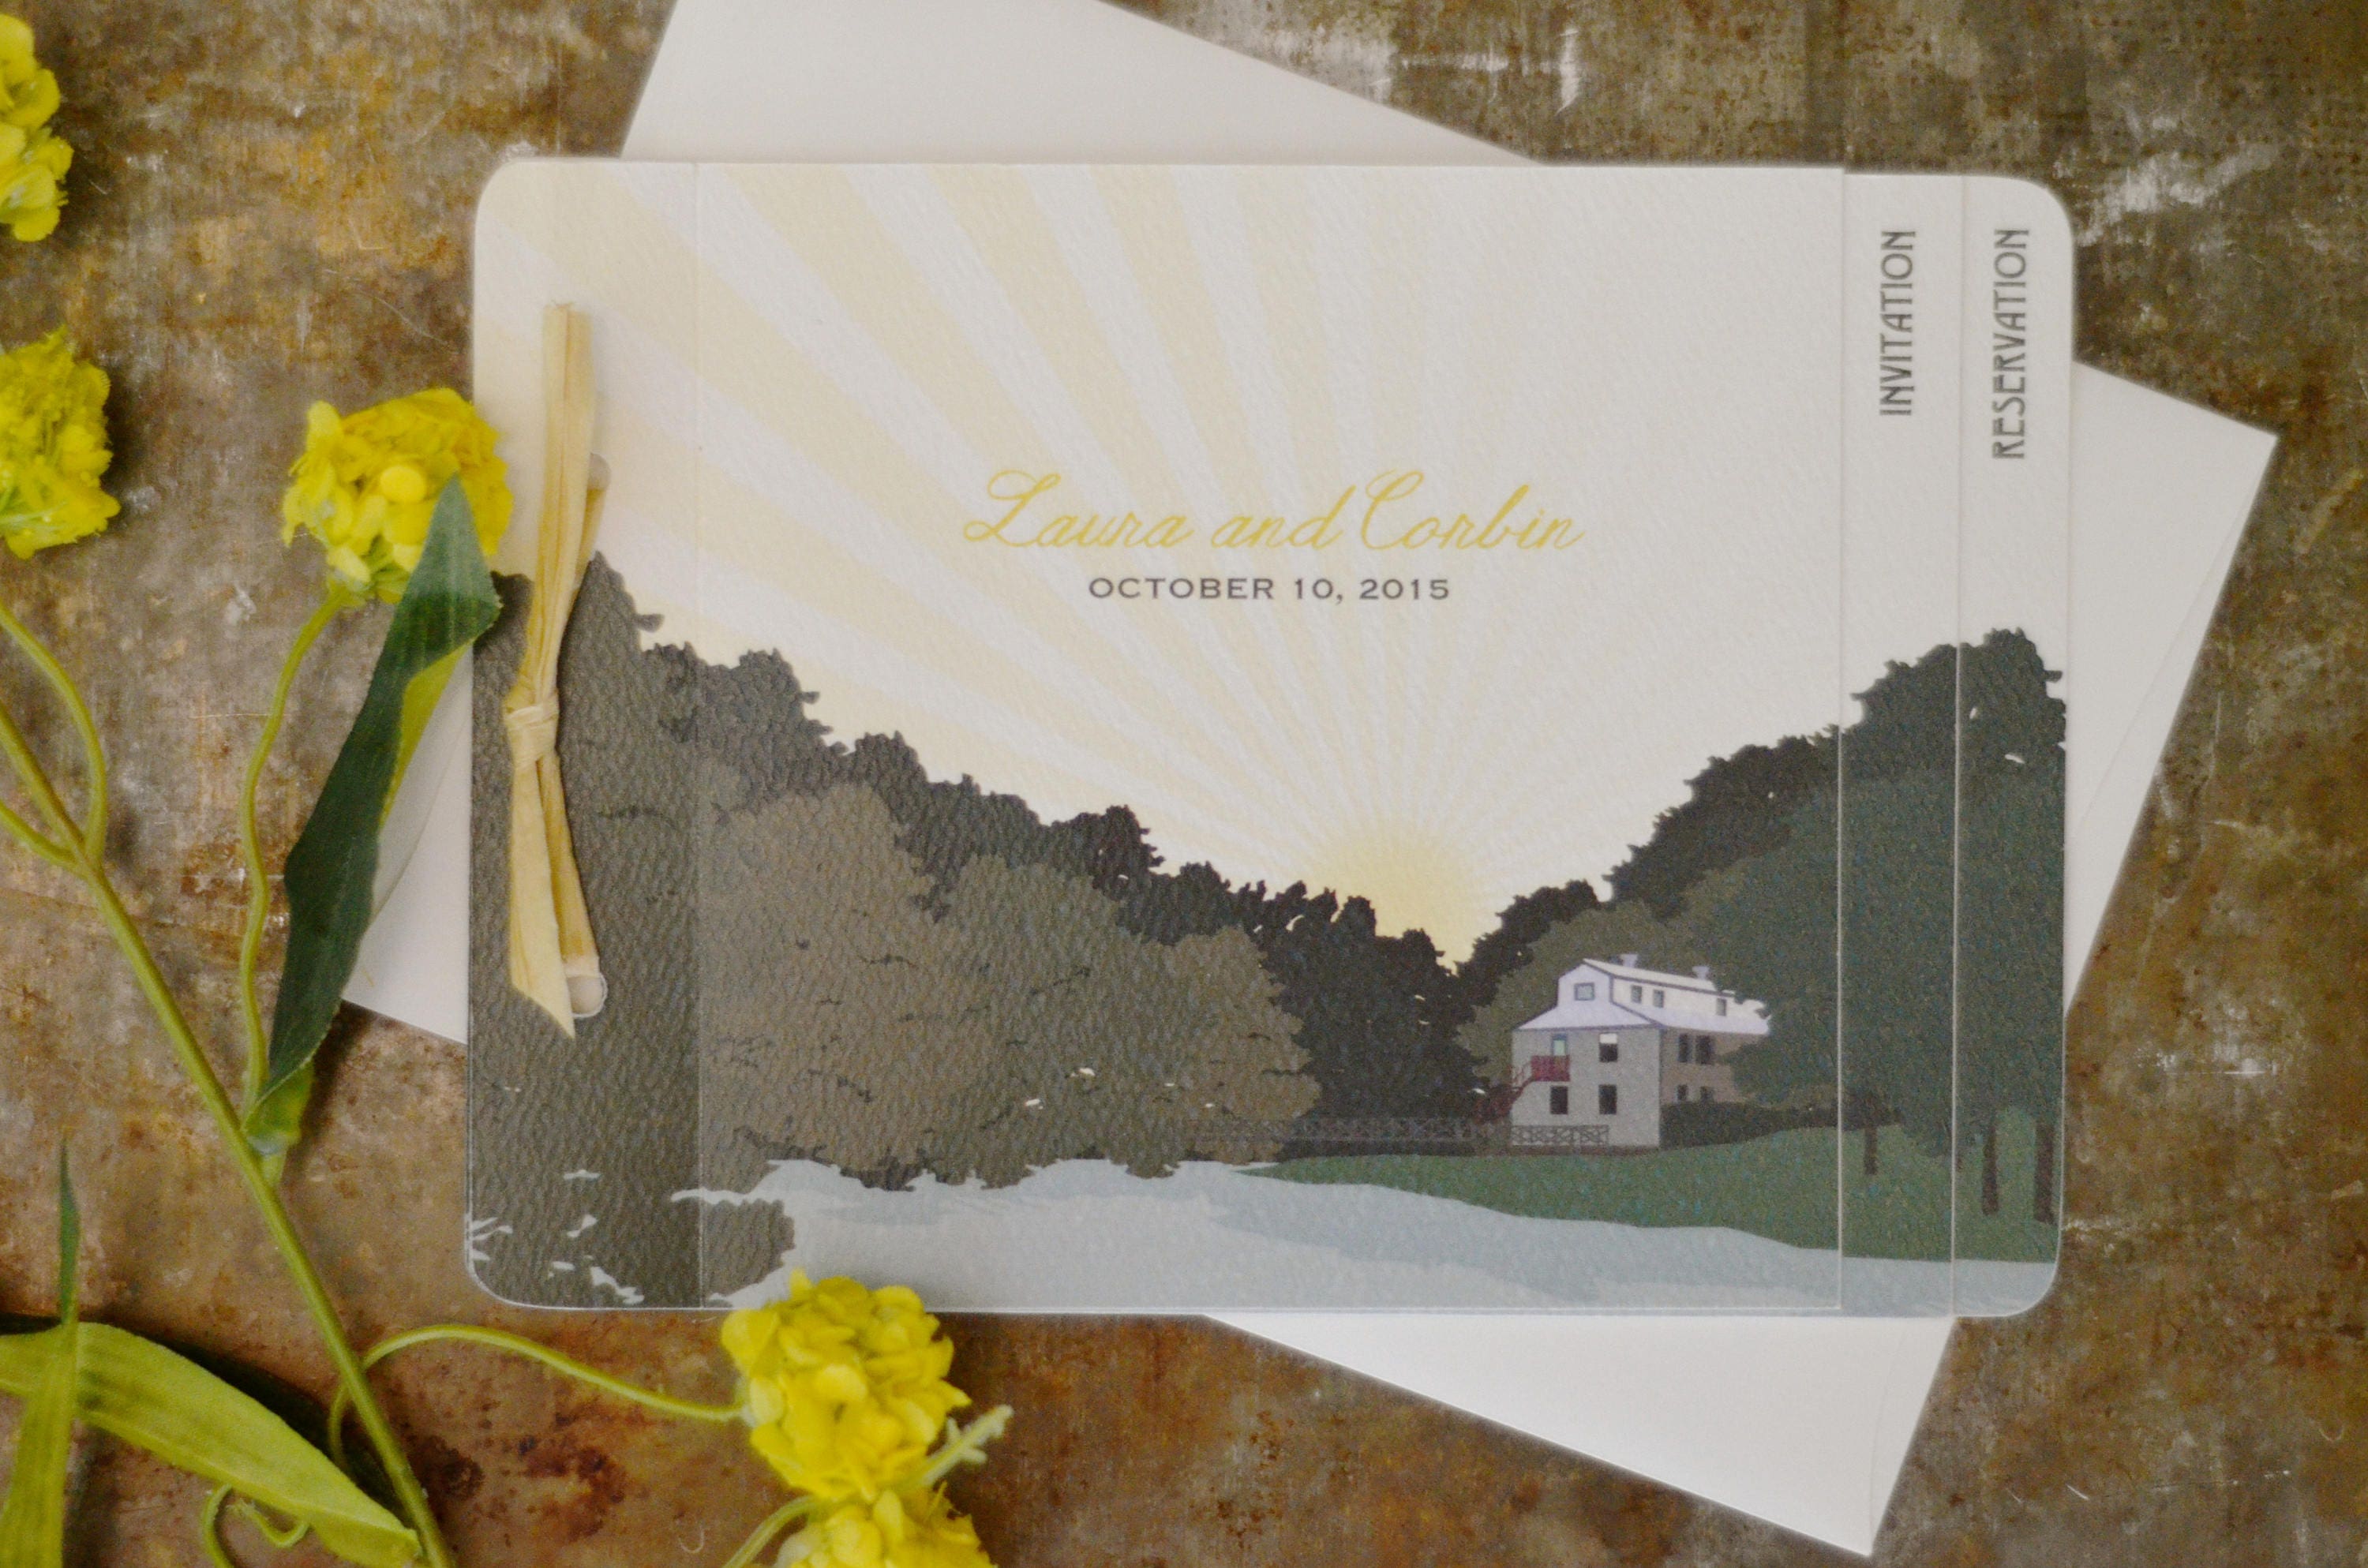 The Inn at Evins Mill Tennessee 3pg Livret Booklet Wedding Invitation with Tear-off RSVP Postcard & A7 Envelopes